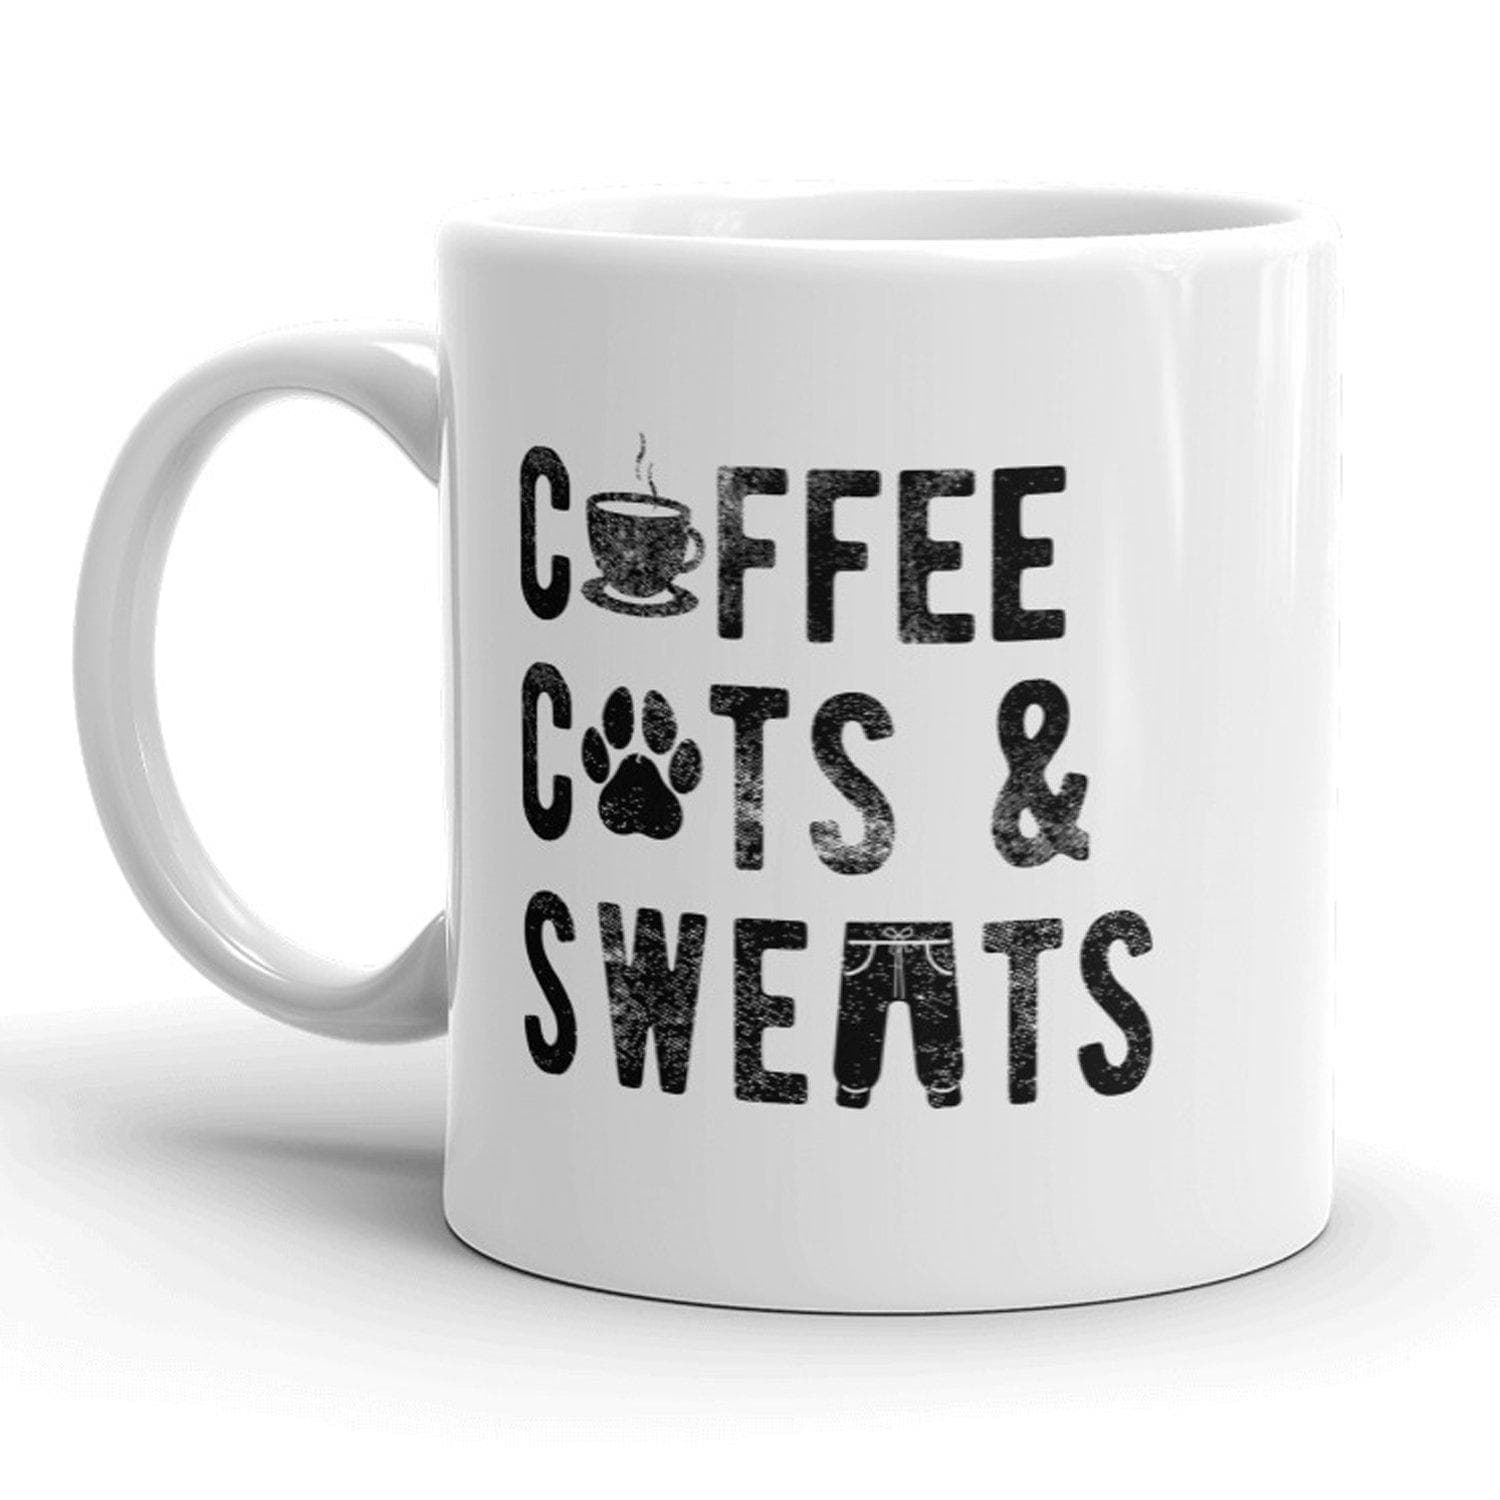 Coffee Cats And Sweats Mug - Crazy Dog T-Shirts